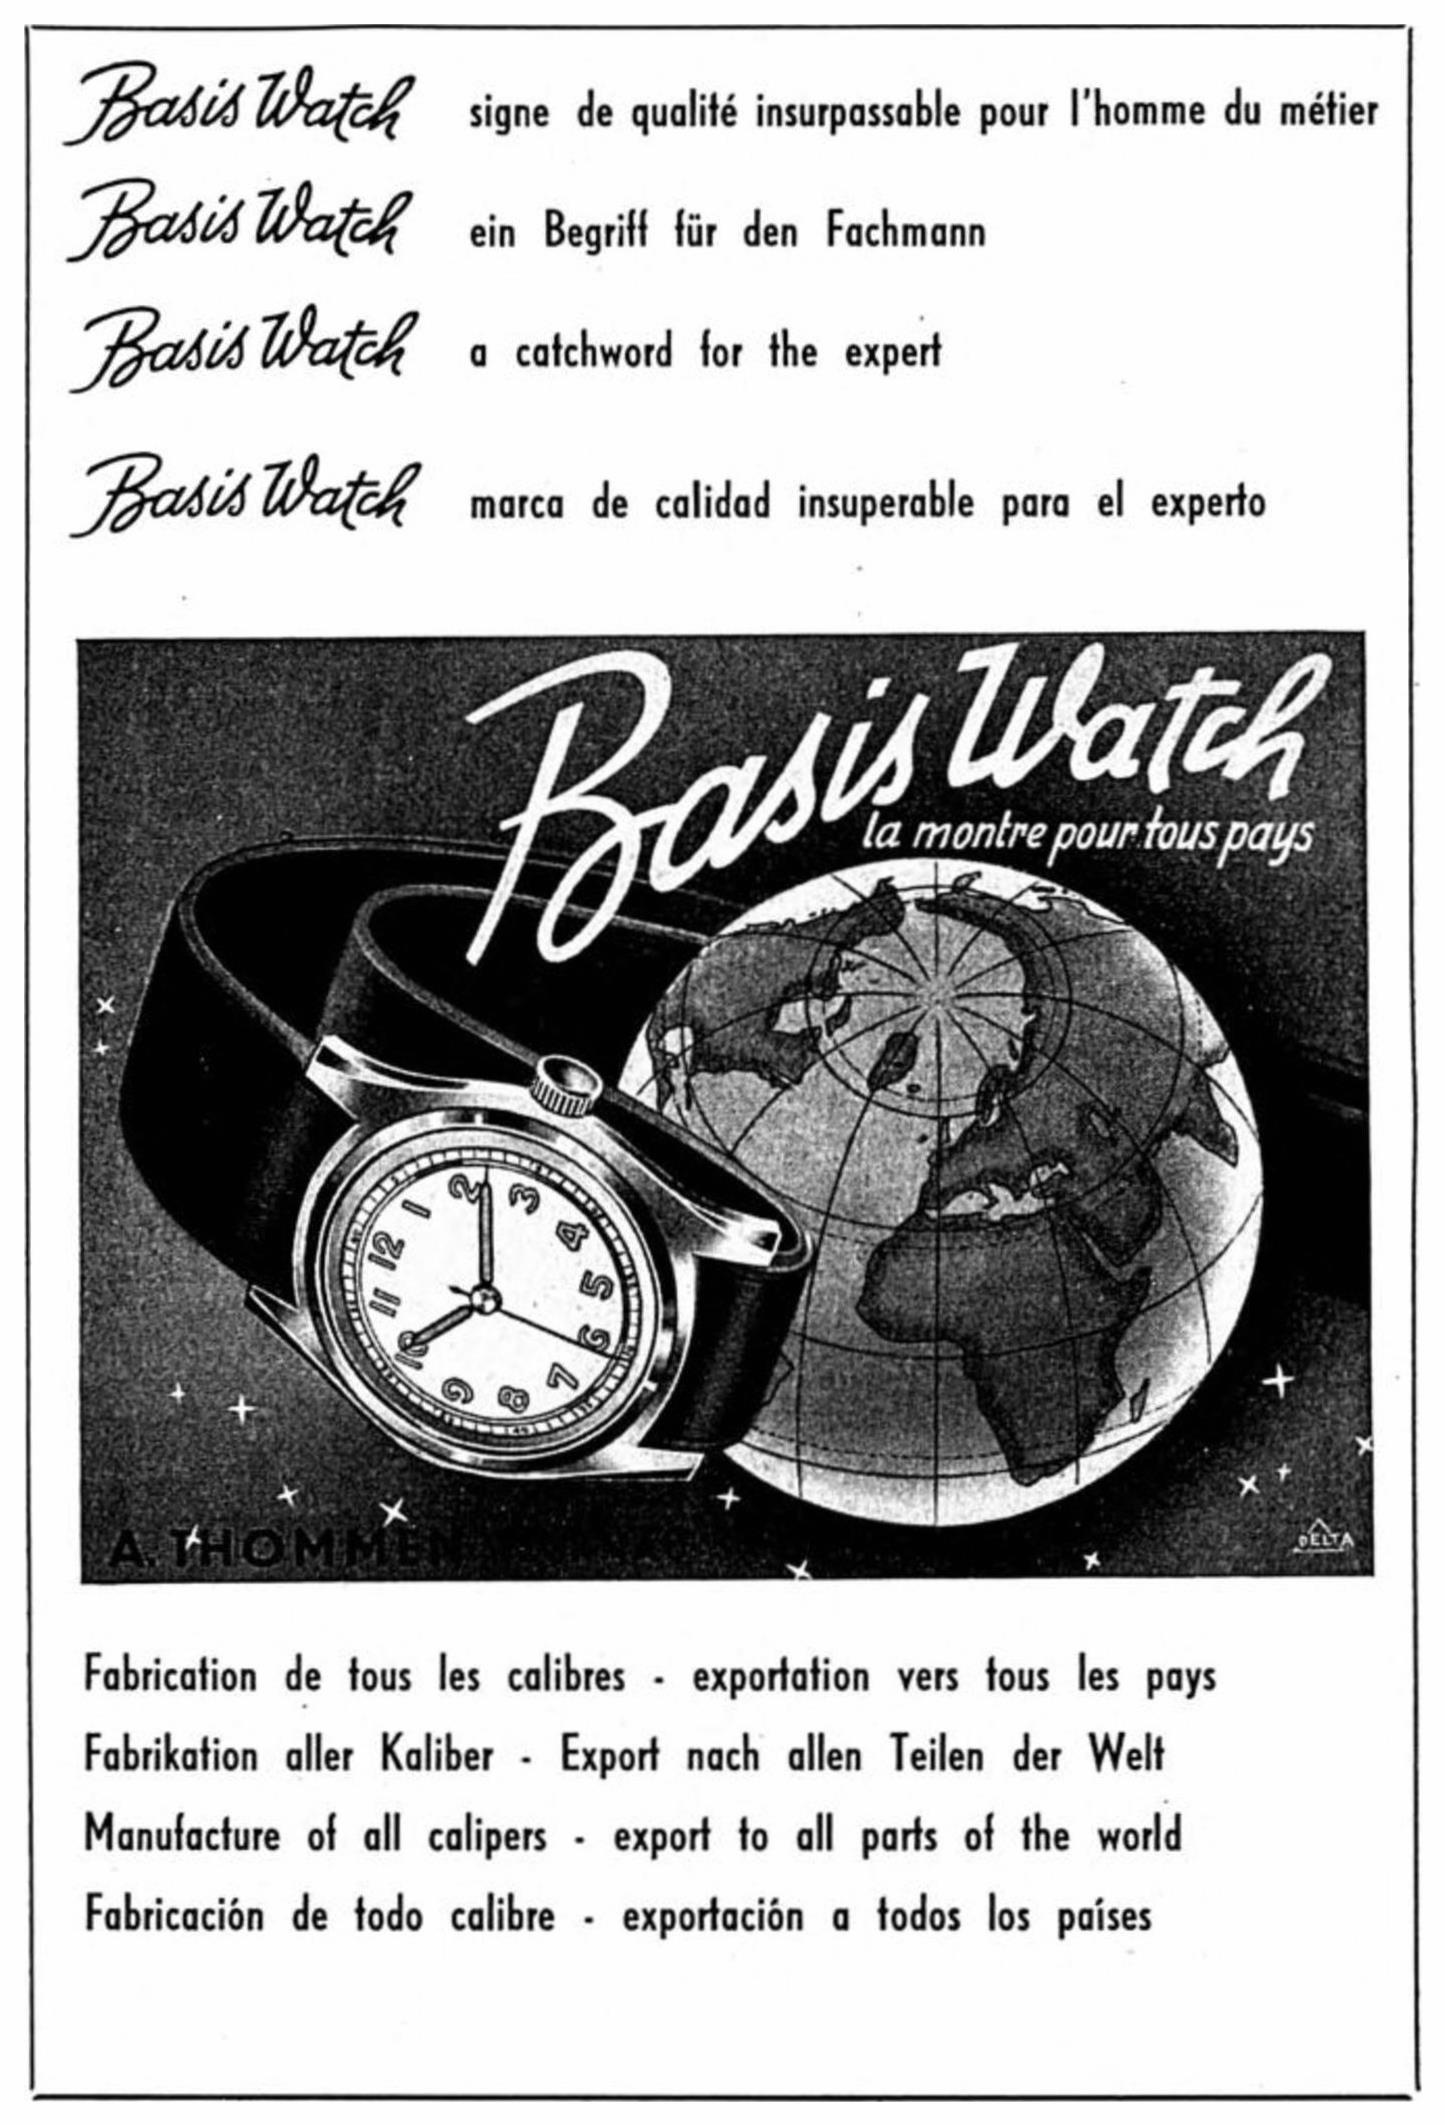 Basis Watch 1952 0.jpg